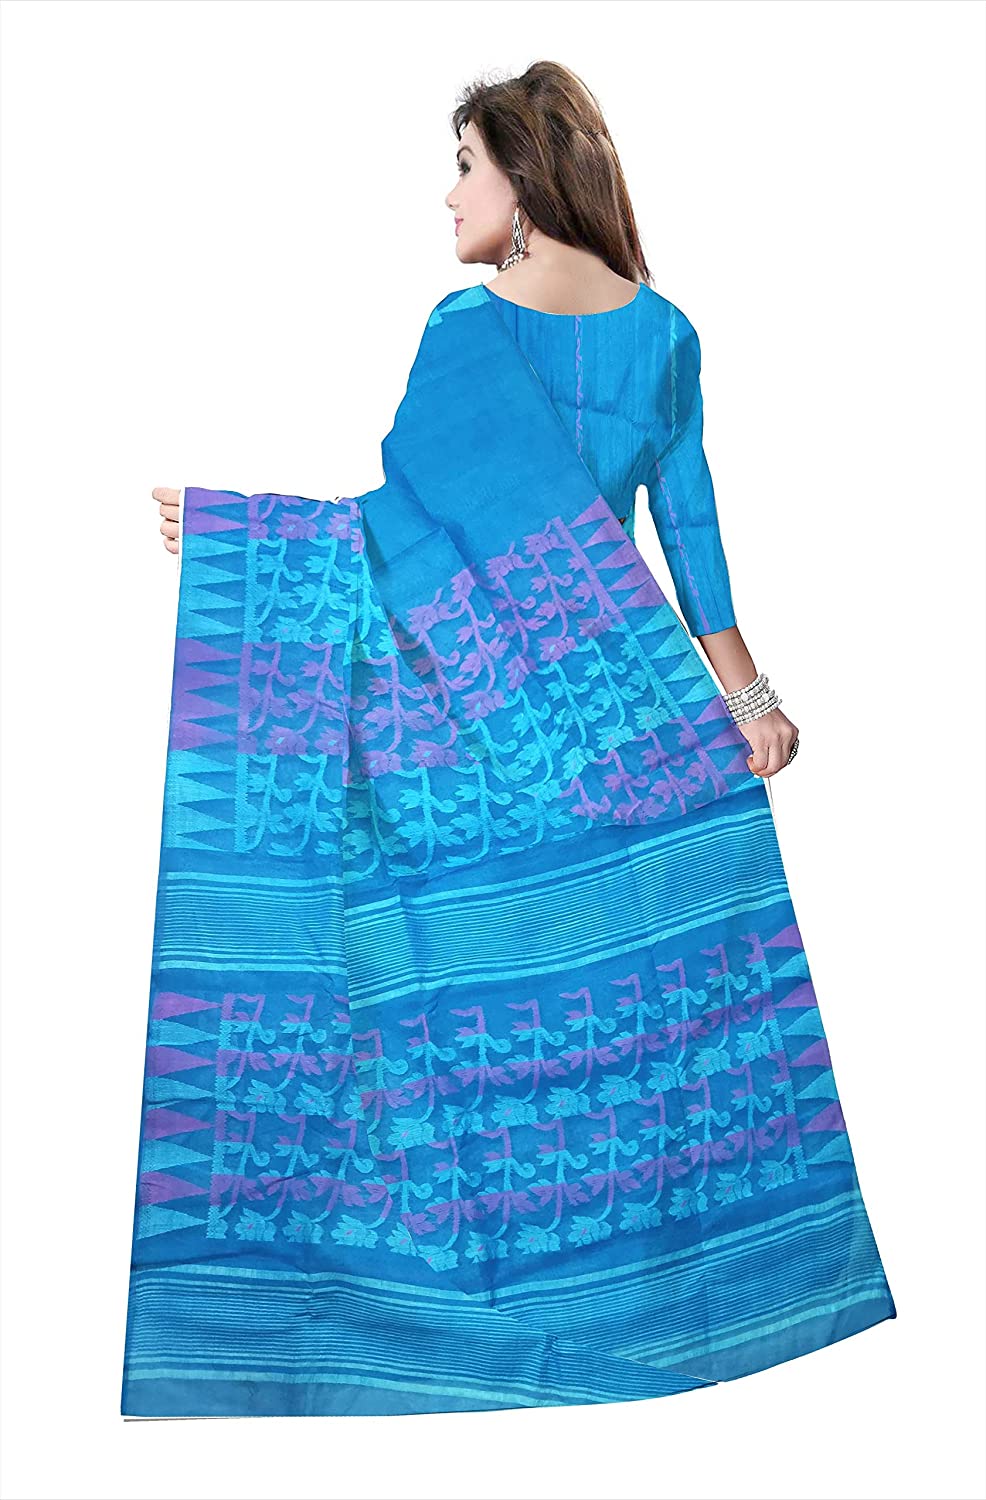 Pradip Fabrics Ethnic Women's Tant jamdani Sky Blue Color Floral Design Saree